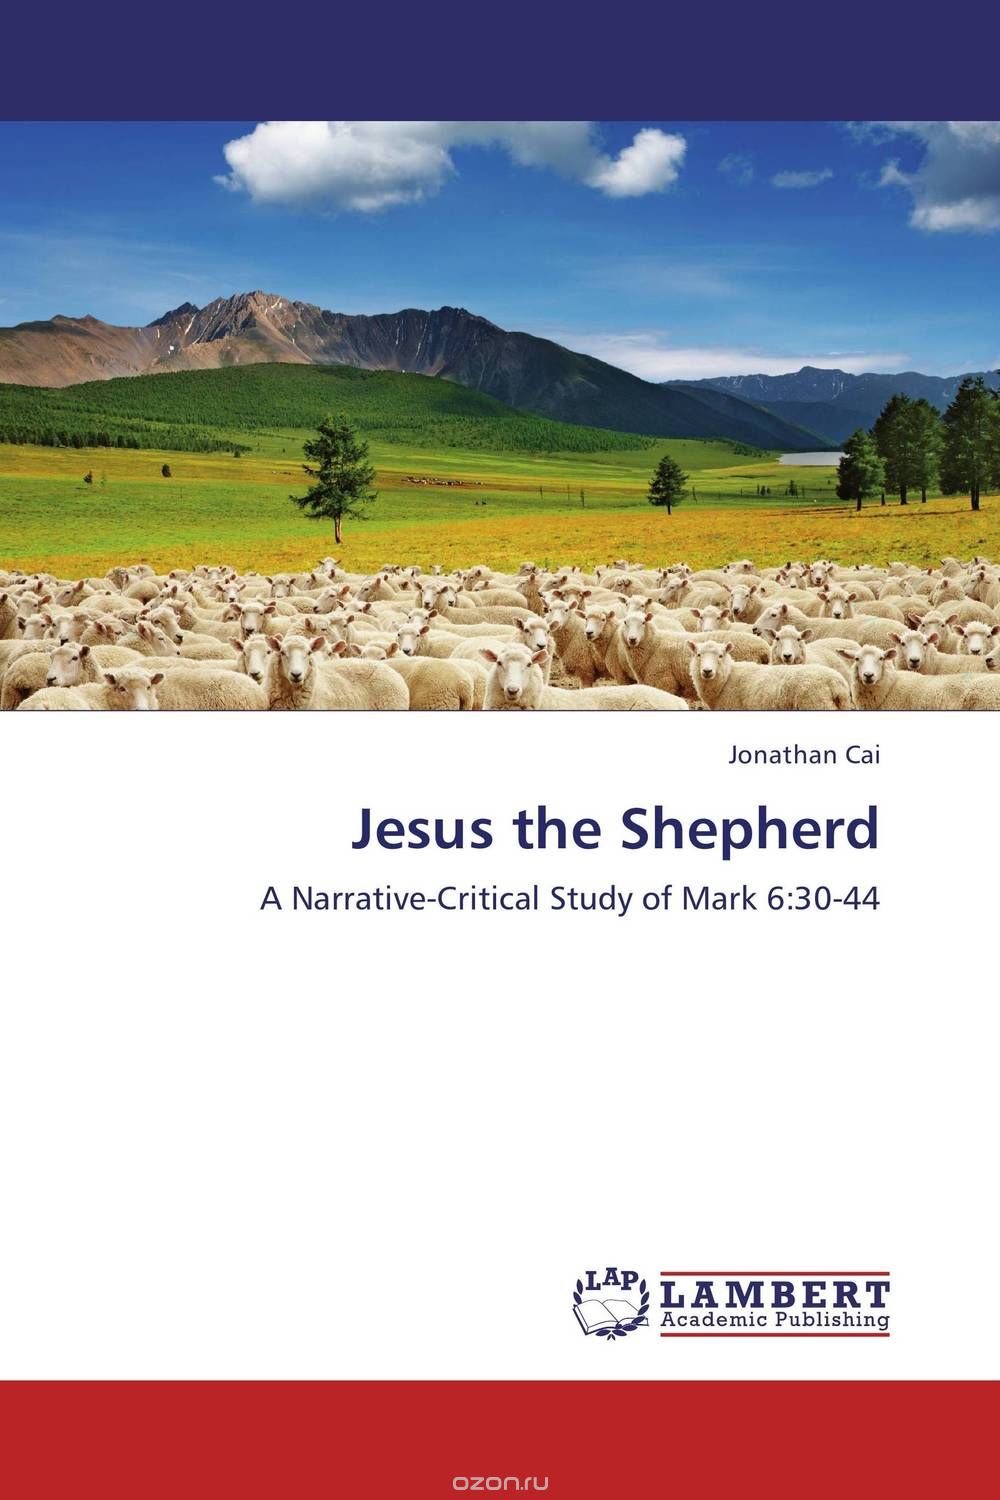 Скачать книгу "Jesus the Shepherd"